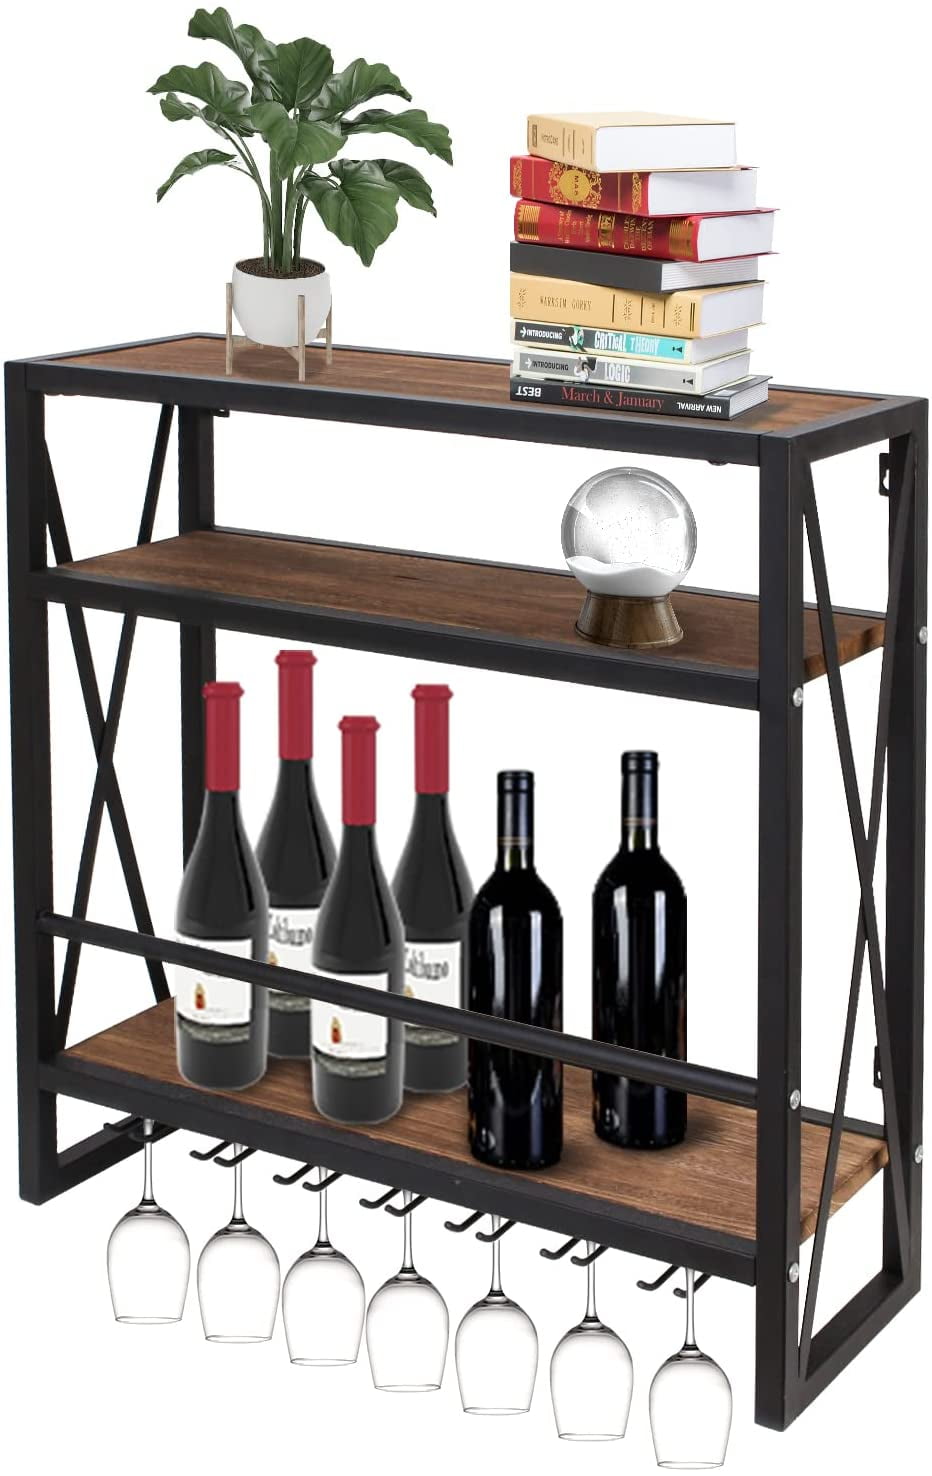 1# Fdit Single Stainless Steel Pipe Wine Bottle Holder Wall Mounted Vertical Red Wine Bottle Holder Rack Elegant Storage for Kitchen Dining Room Bar Wine Cellar 